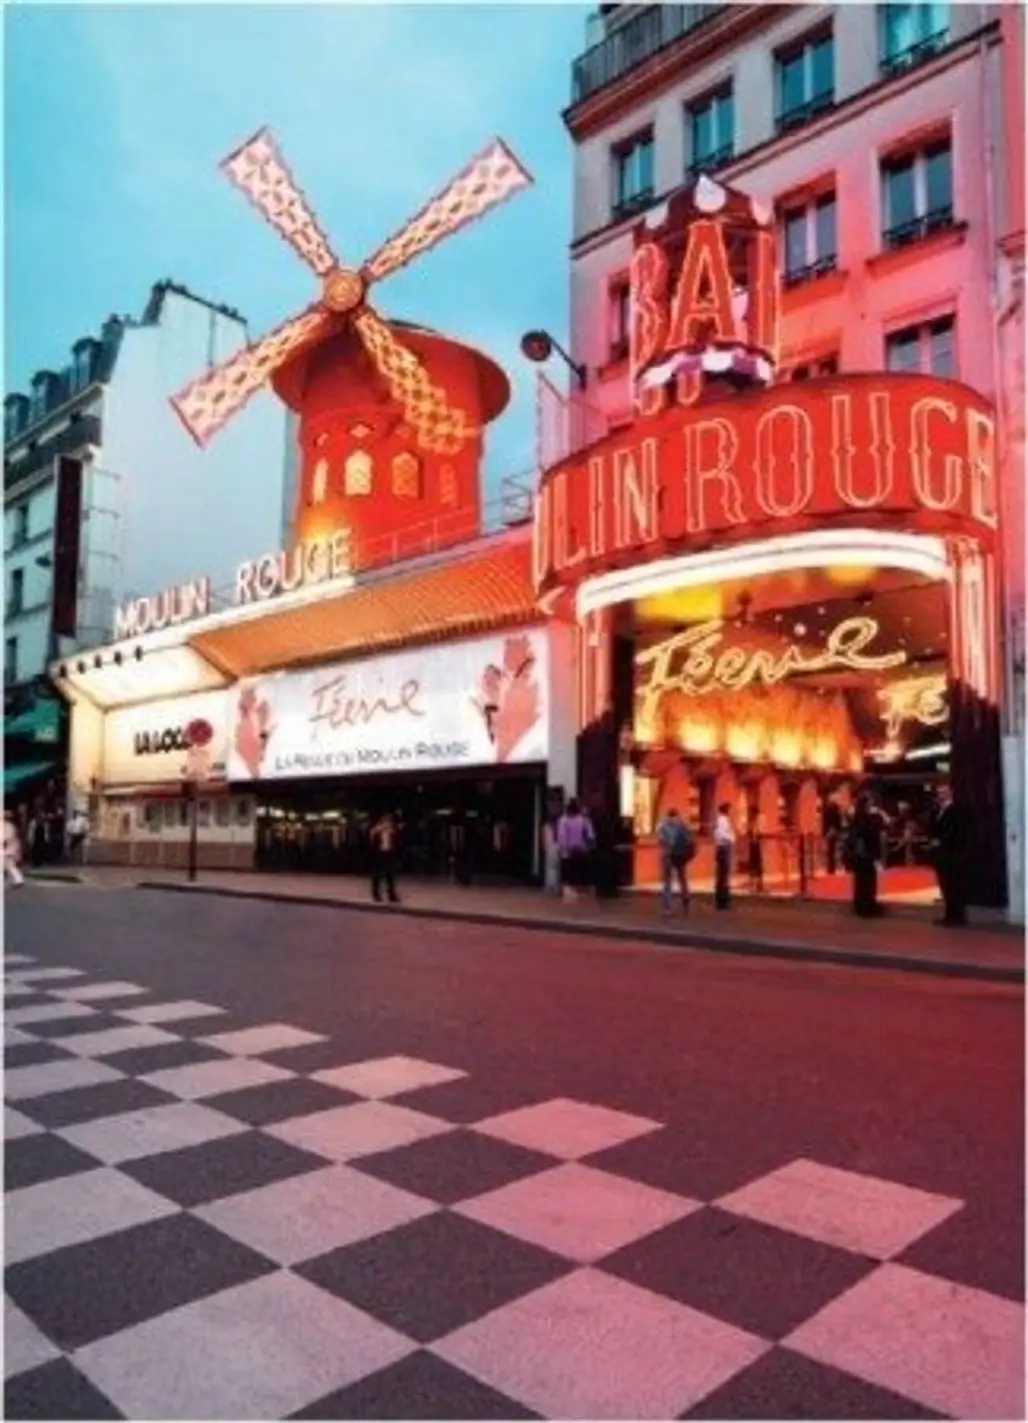 Moulin Rouge,plaza,facade,restaurant,signage,